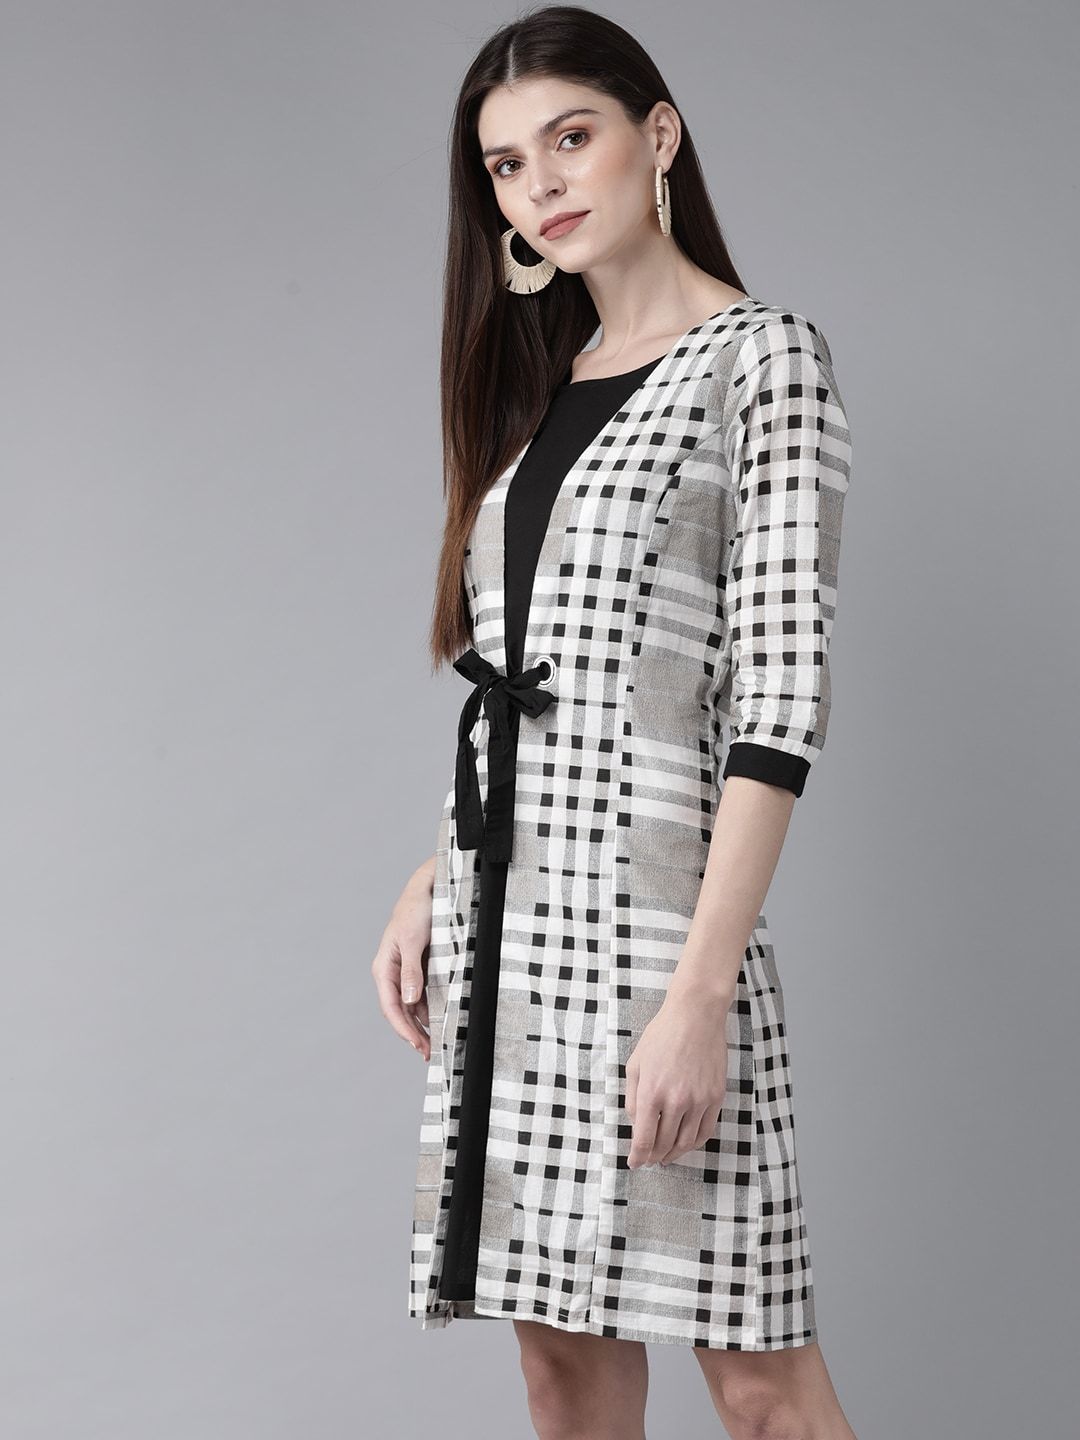 Women's  White & Black Checked Layered A-Line Dress - AKS